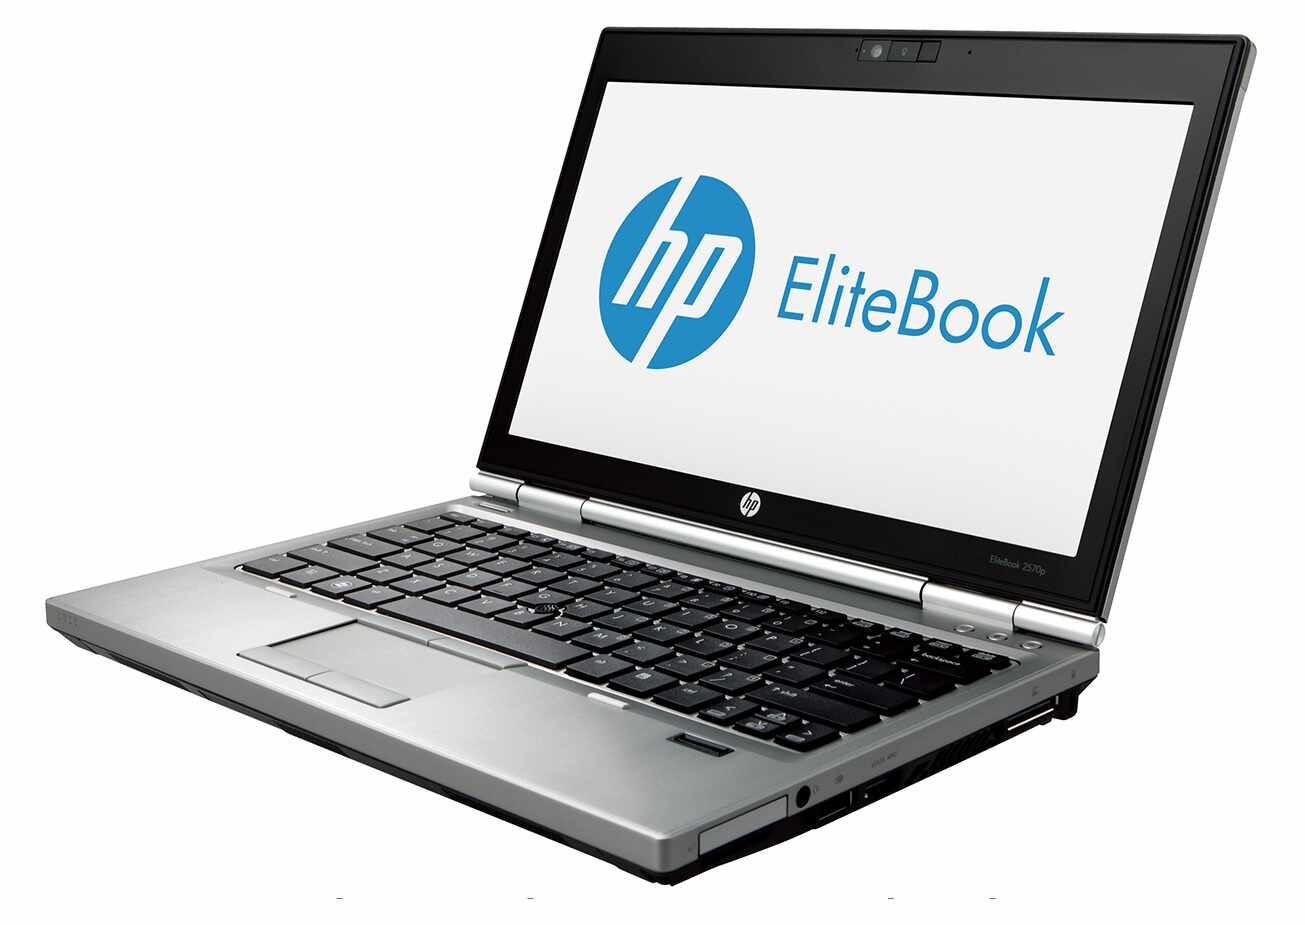 Laptop Second Hand HP EliteBook 2570p, Intel Core i5-3360M 2.80GHz, 4GB DDR3, 120GB SSD, DVD-RW, 12 Inch, Webcam